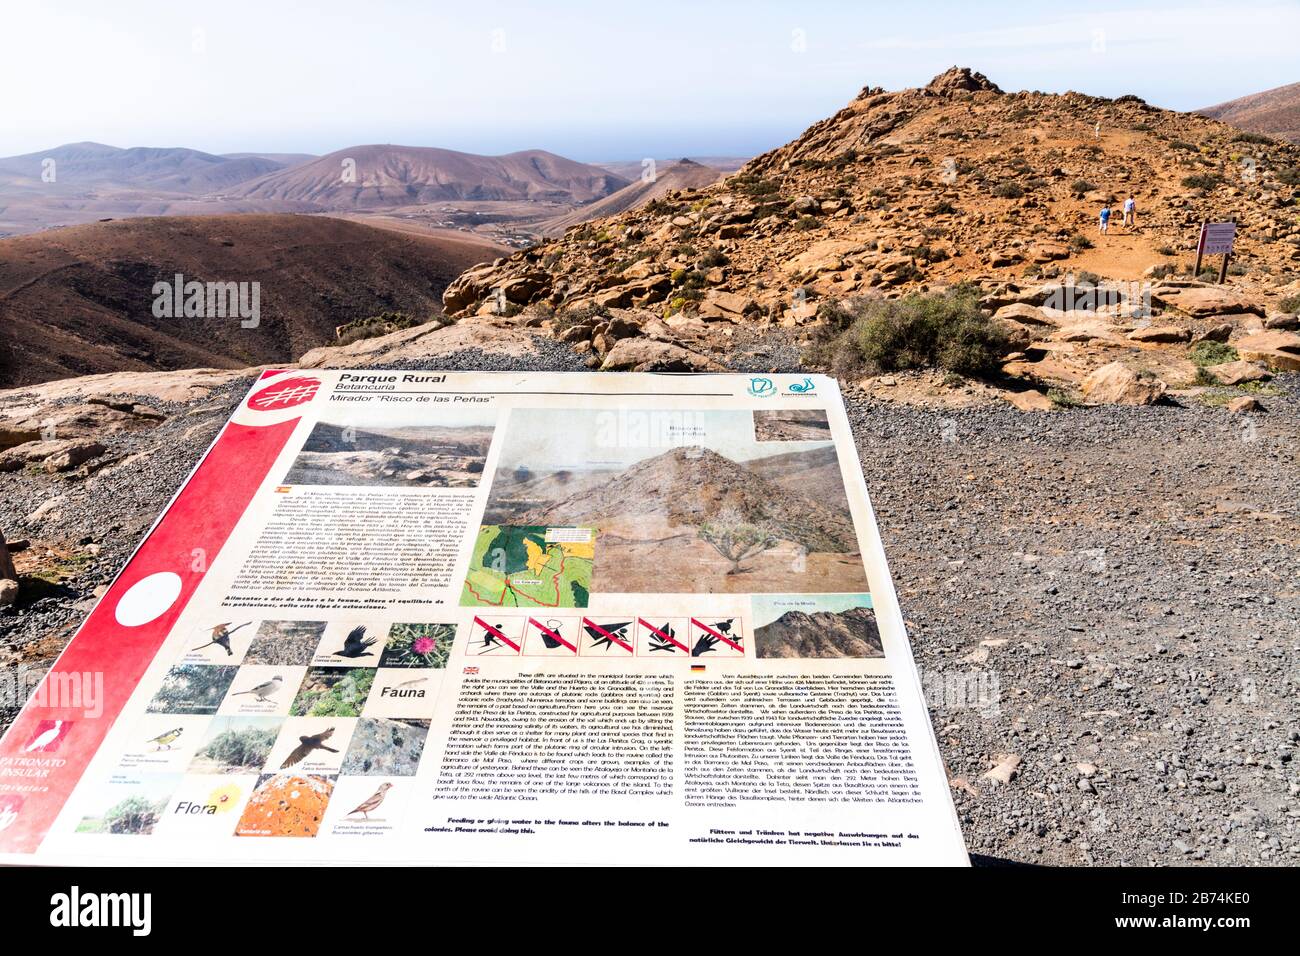 An interpetive panel and the view from Mirador del Risco de las Peñas on the Canary Island of Fuerteventura Stock Photo